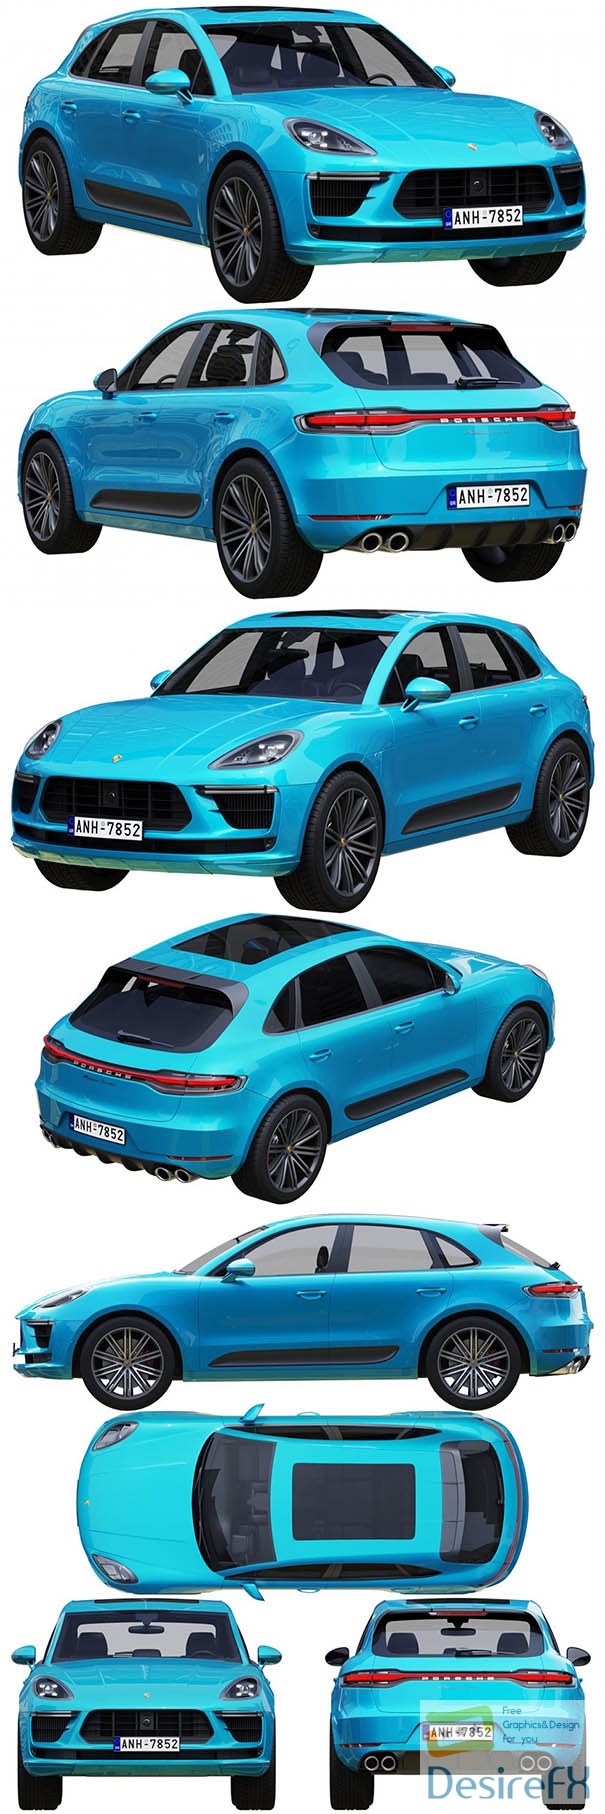 Porsche Macan Turbo 2020 3D Model